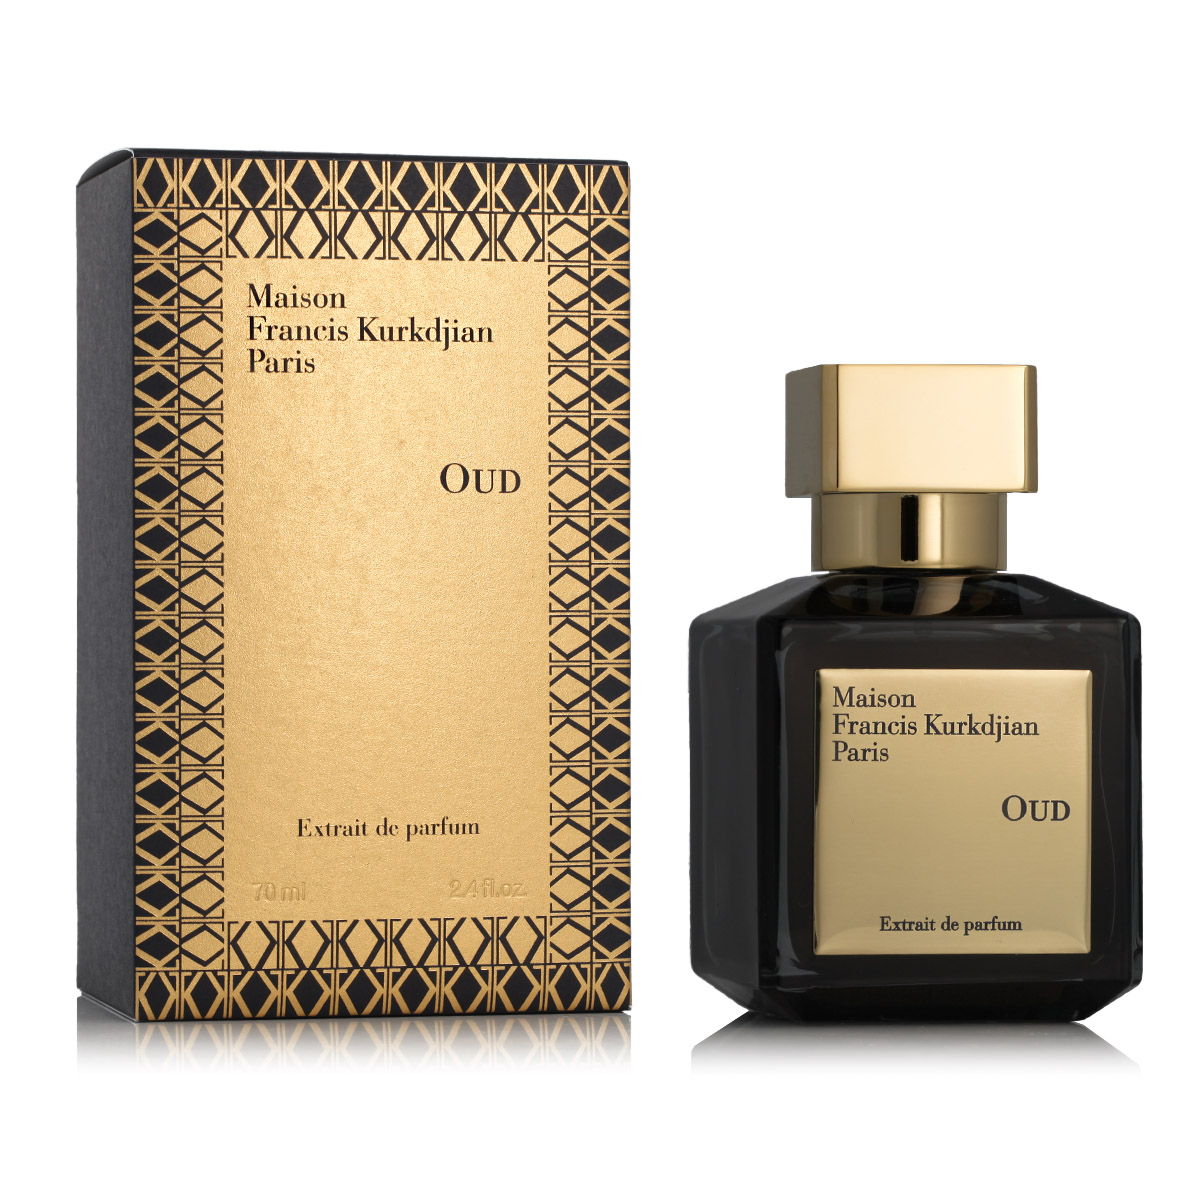 Maison Francis Kurkdjian Oud Extrait de Parfum 70ml NIŠINIAI Kvepalai Unisex